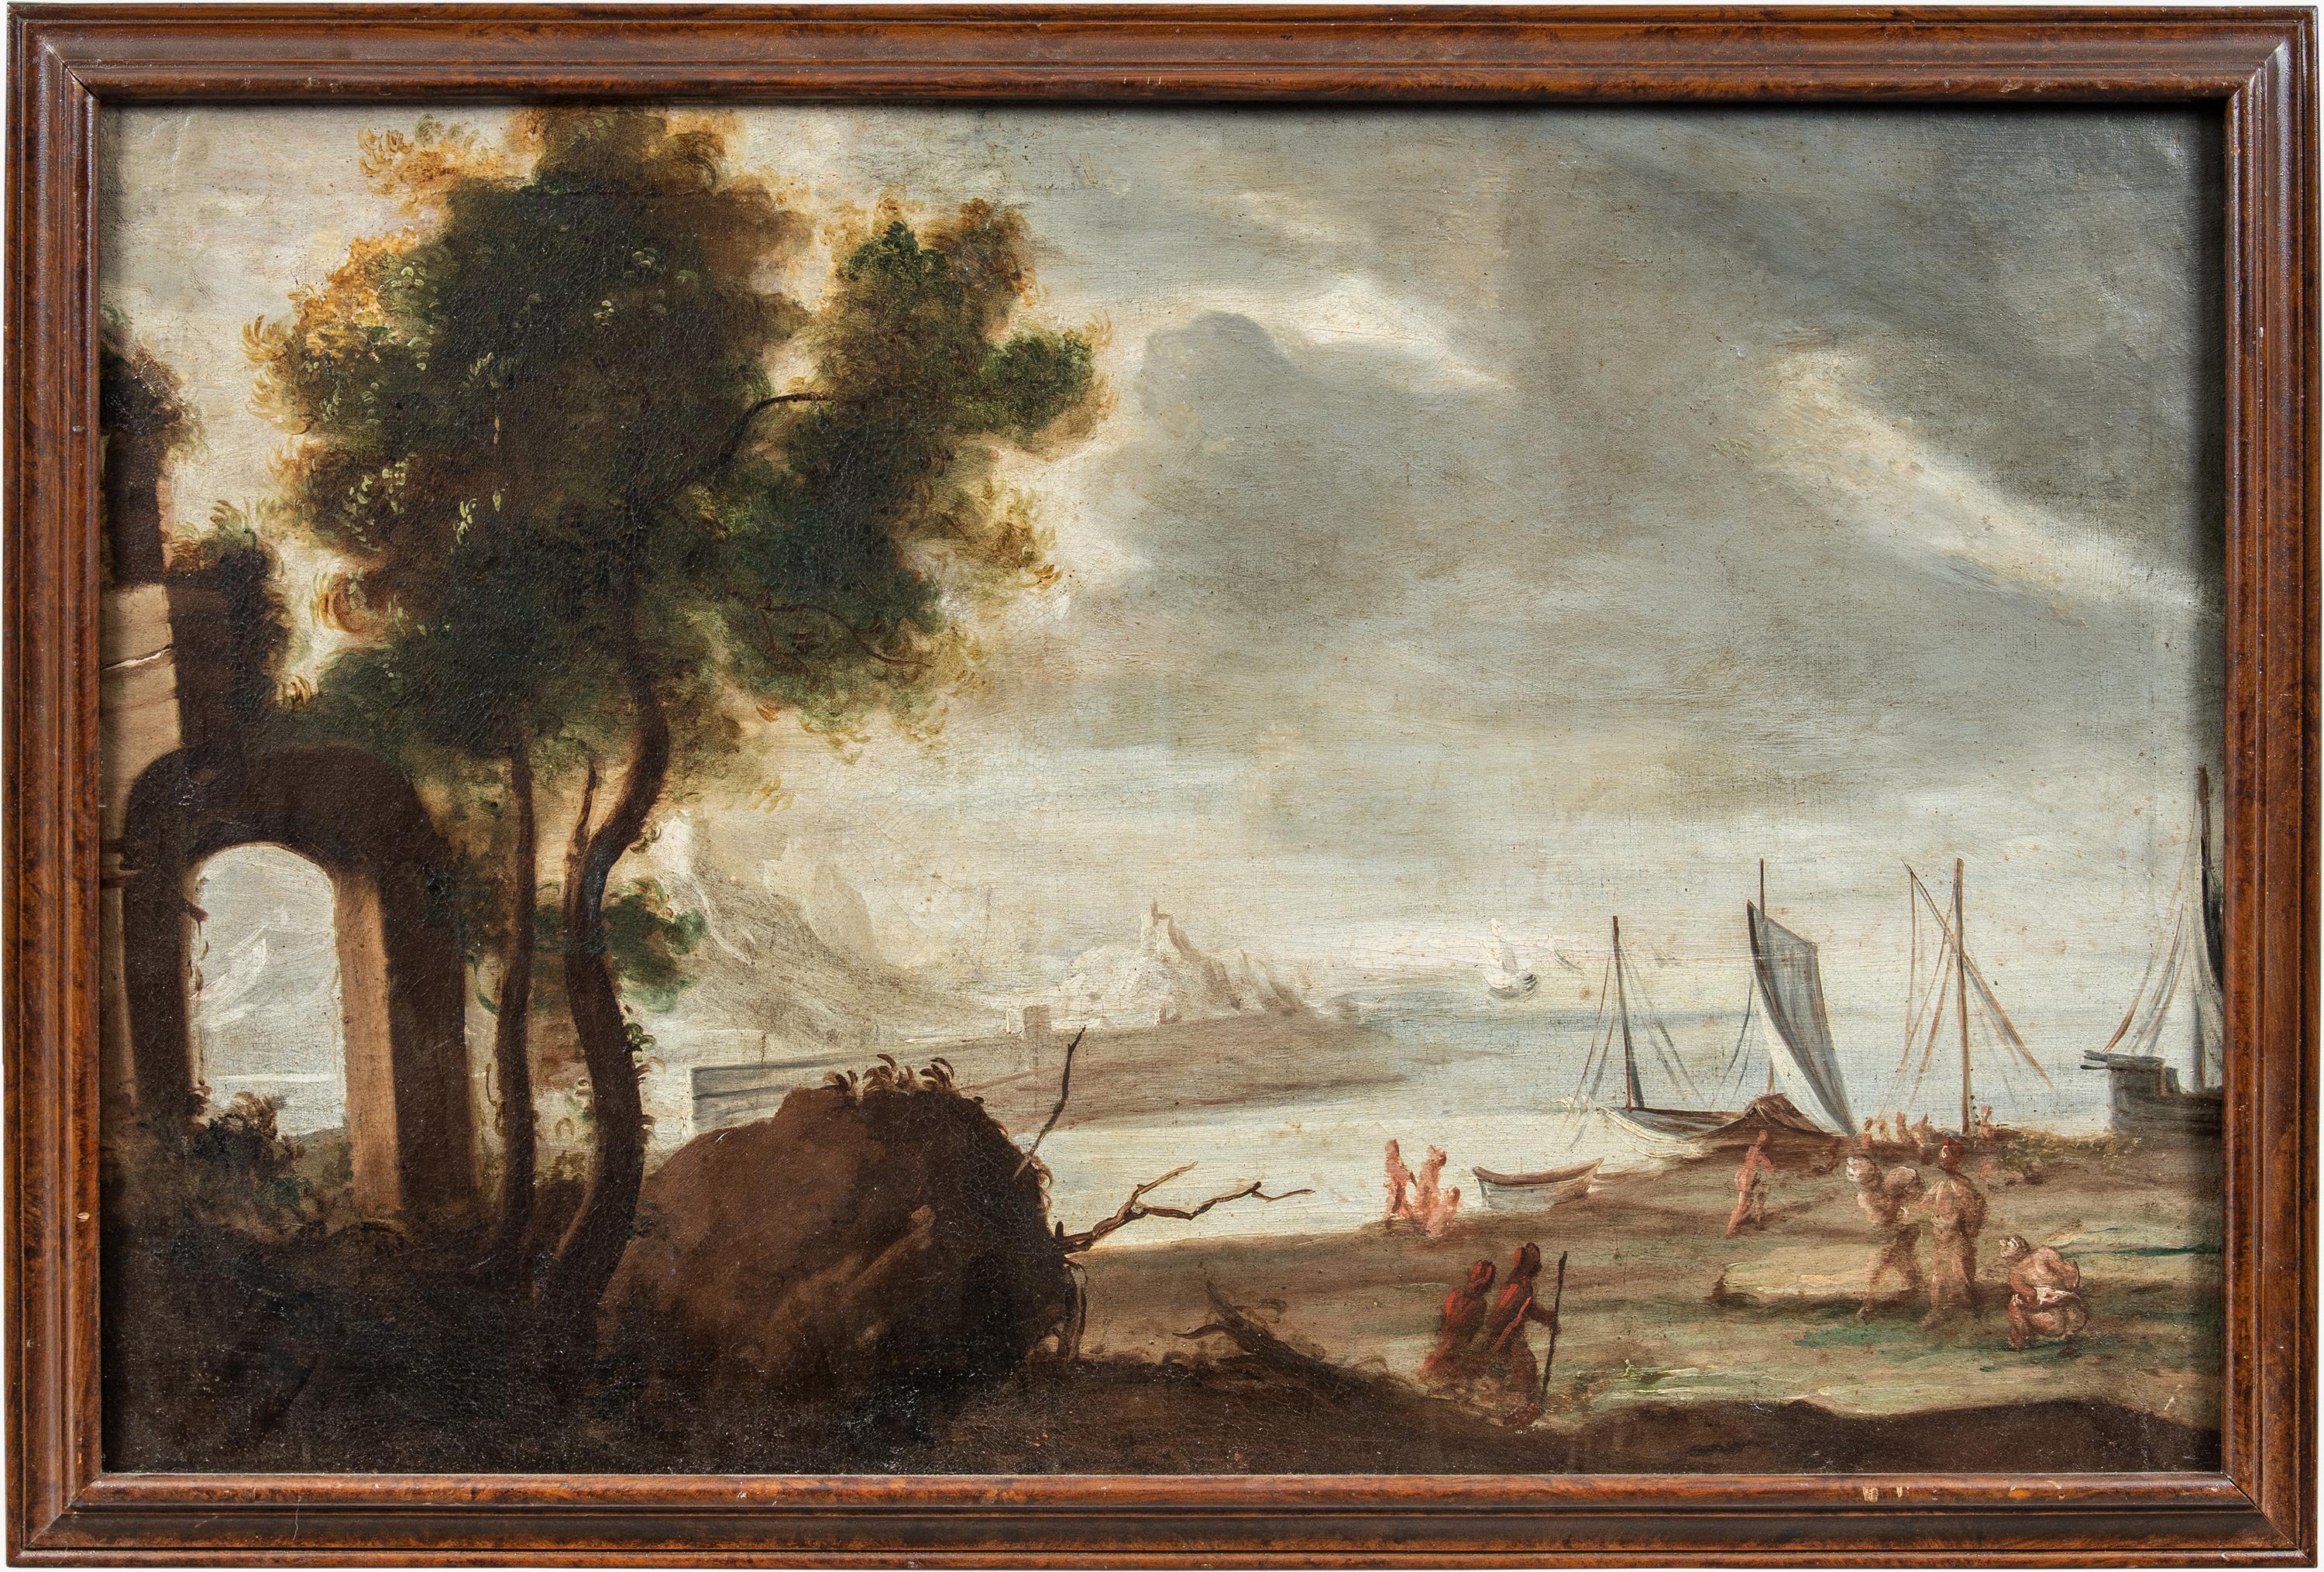 Baroque Italian painter - 17th century landscape painting - Port Scene